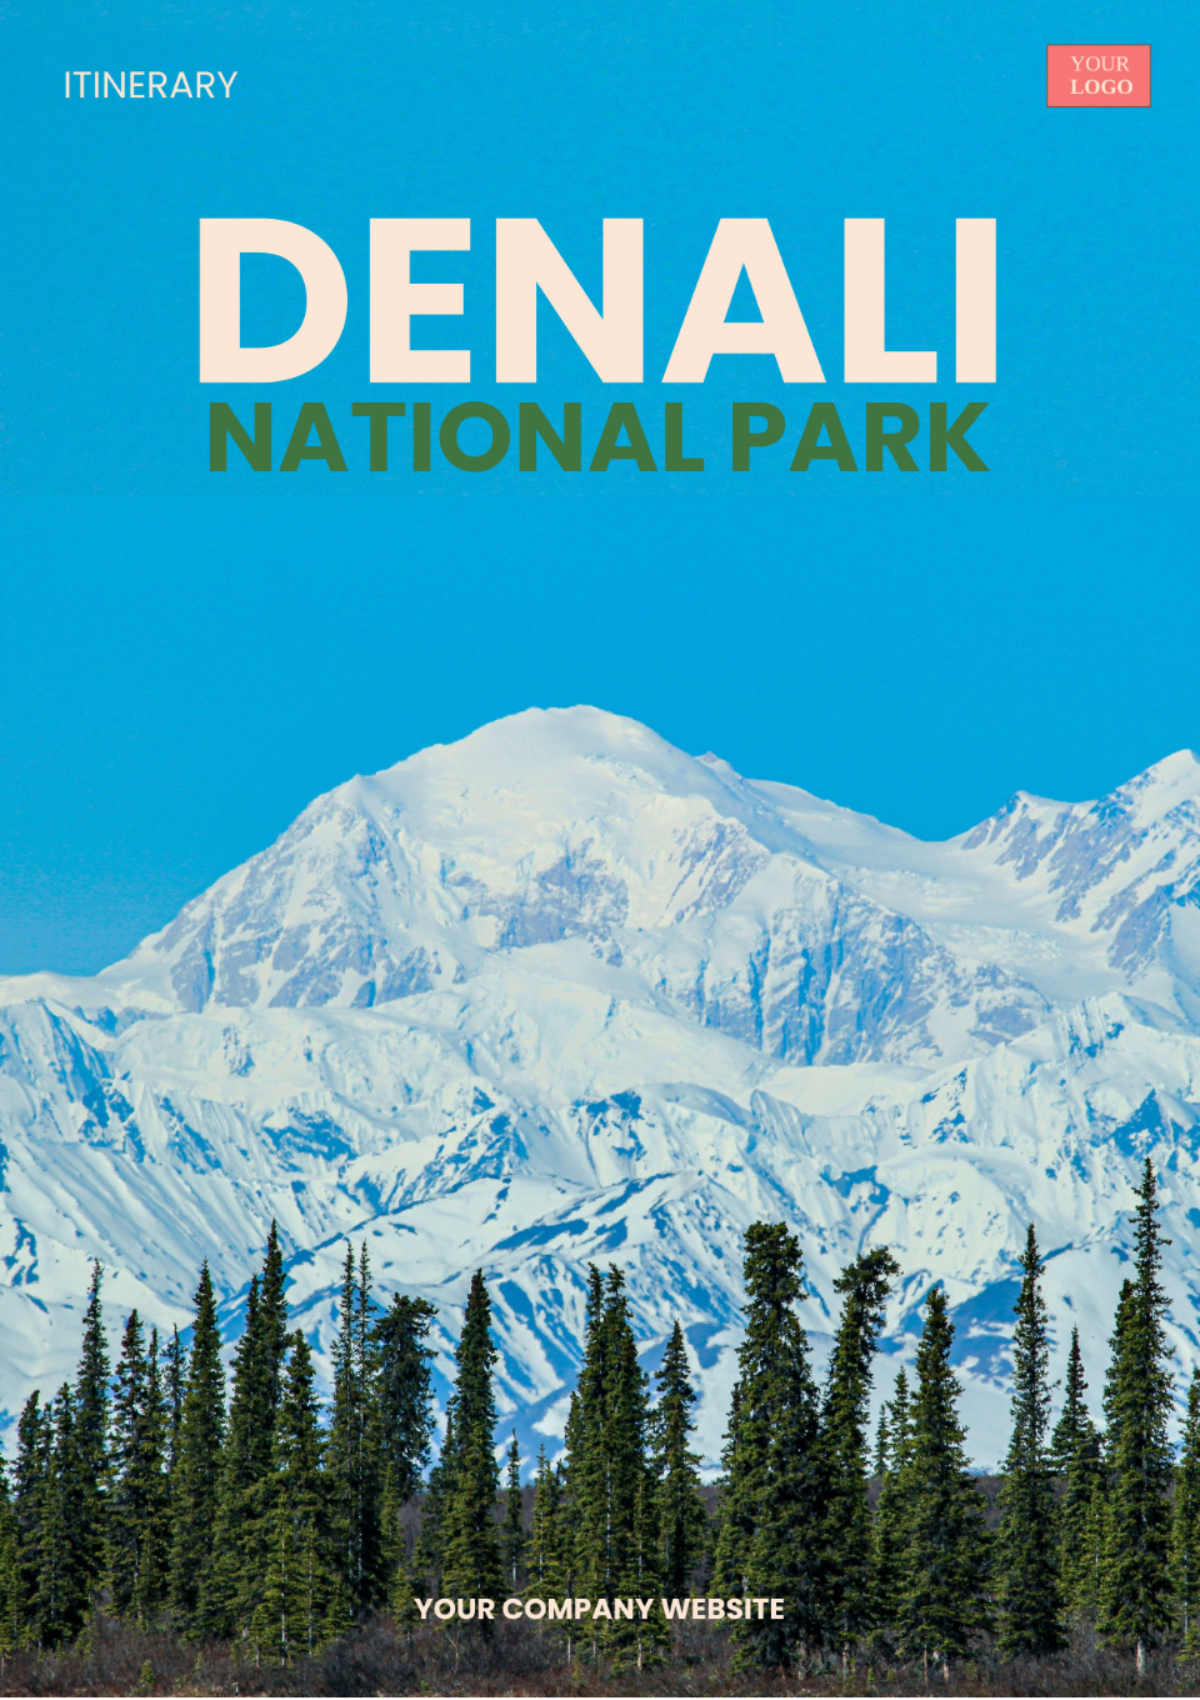 Free Denali National Park Itinerary Template